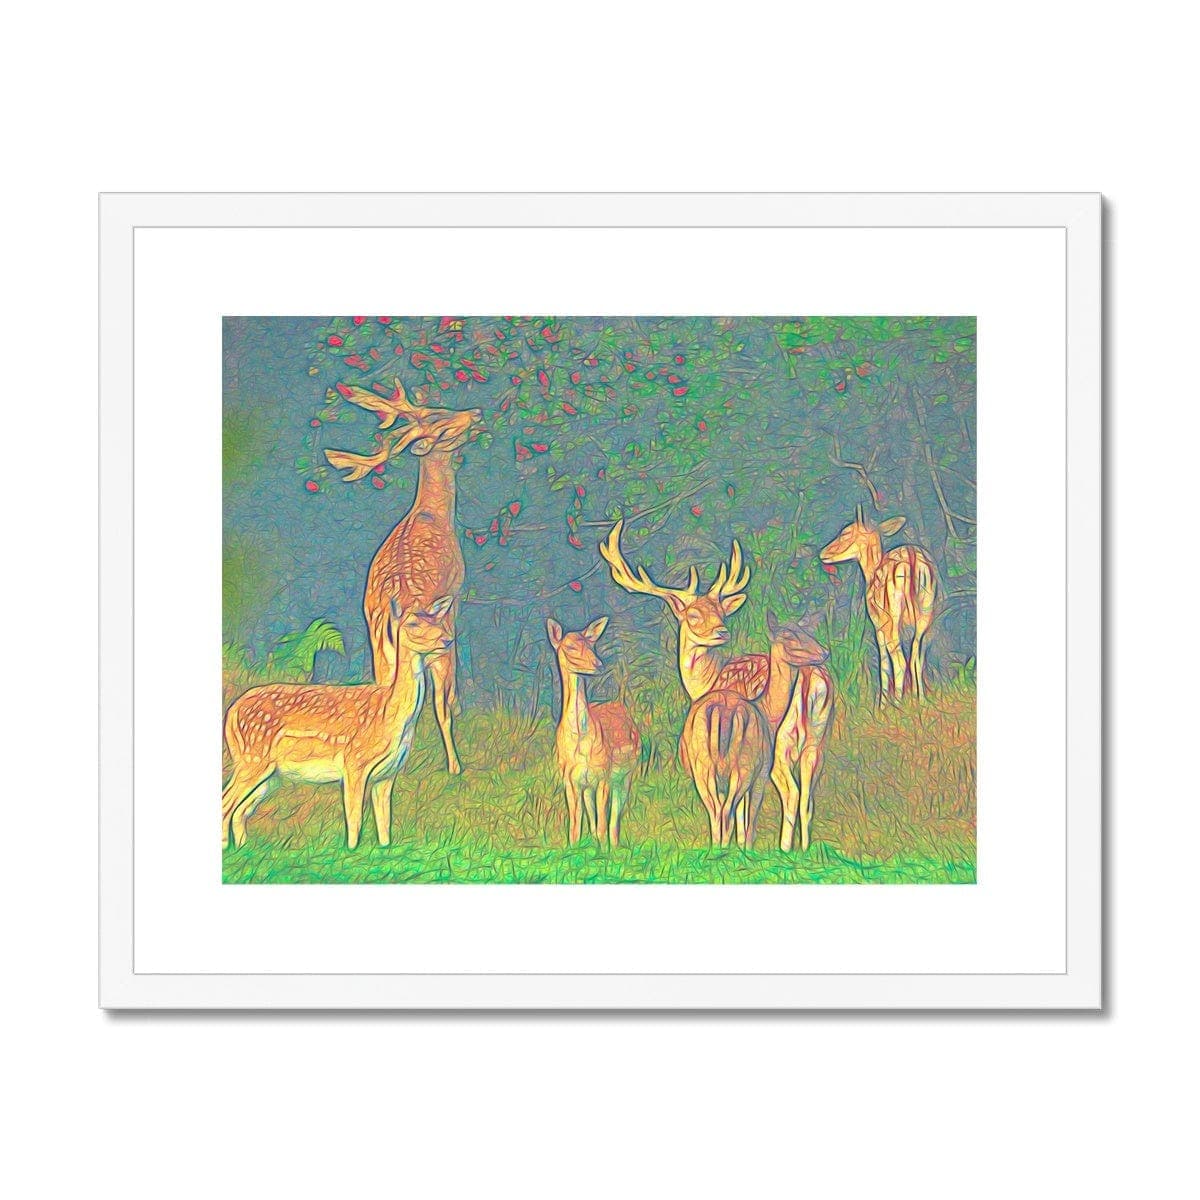 Deer pack in the forest, Framed & Mounted Print, by Ingrid Hütten